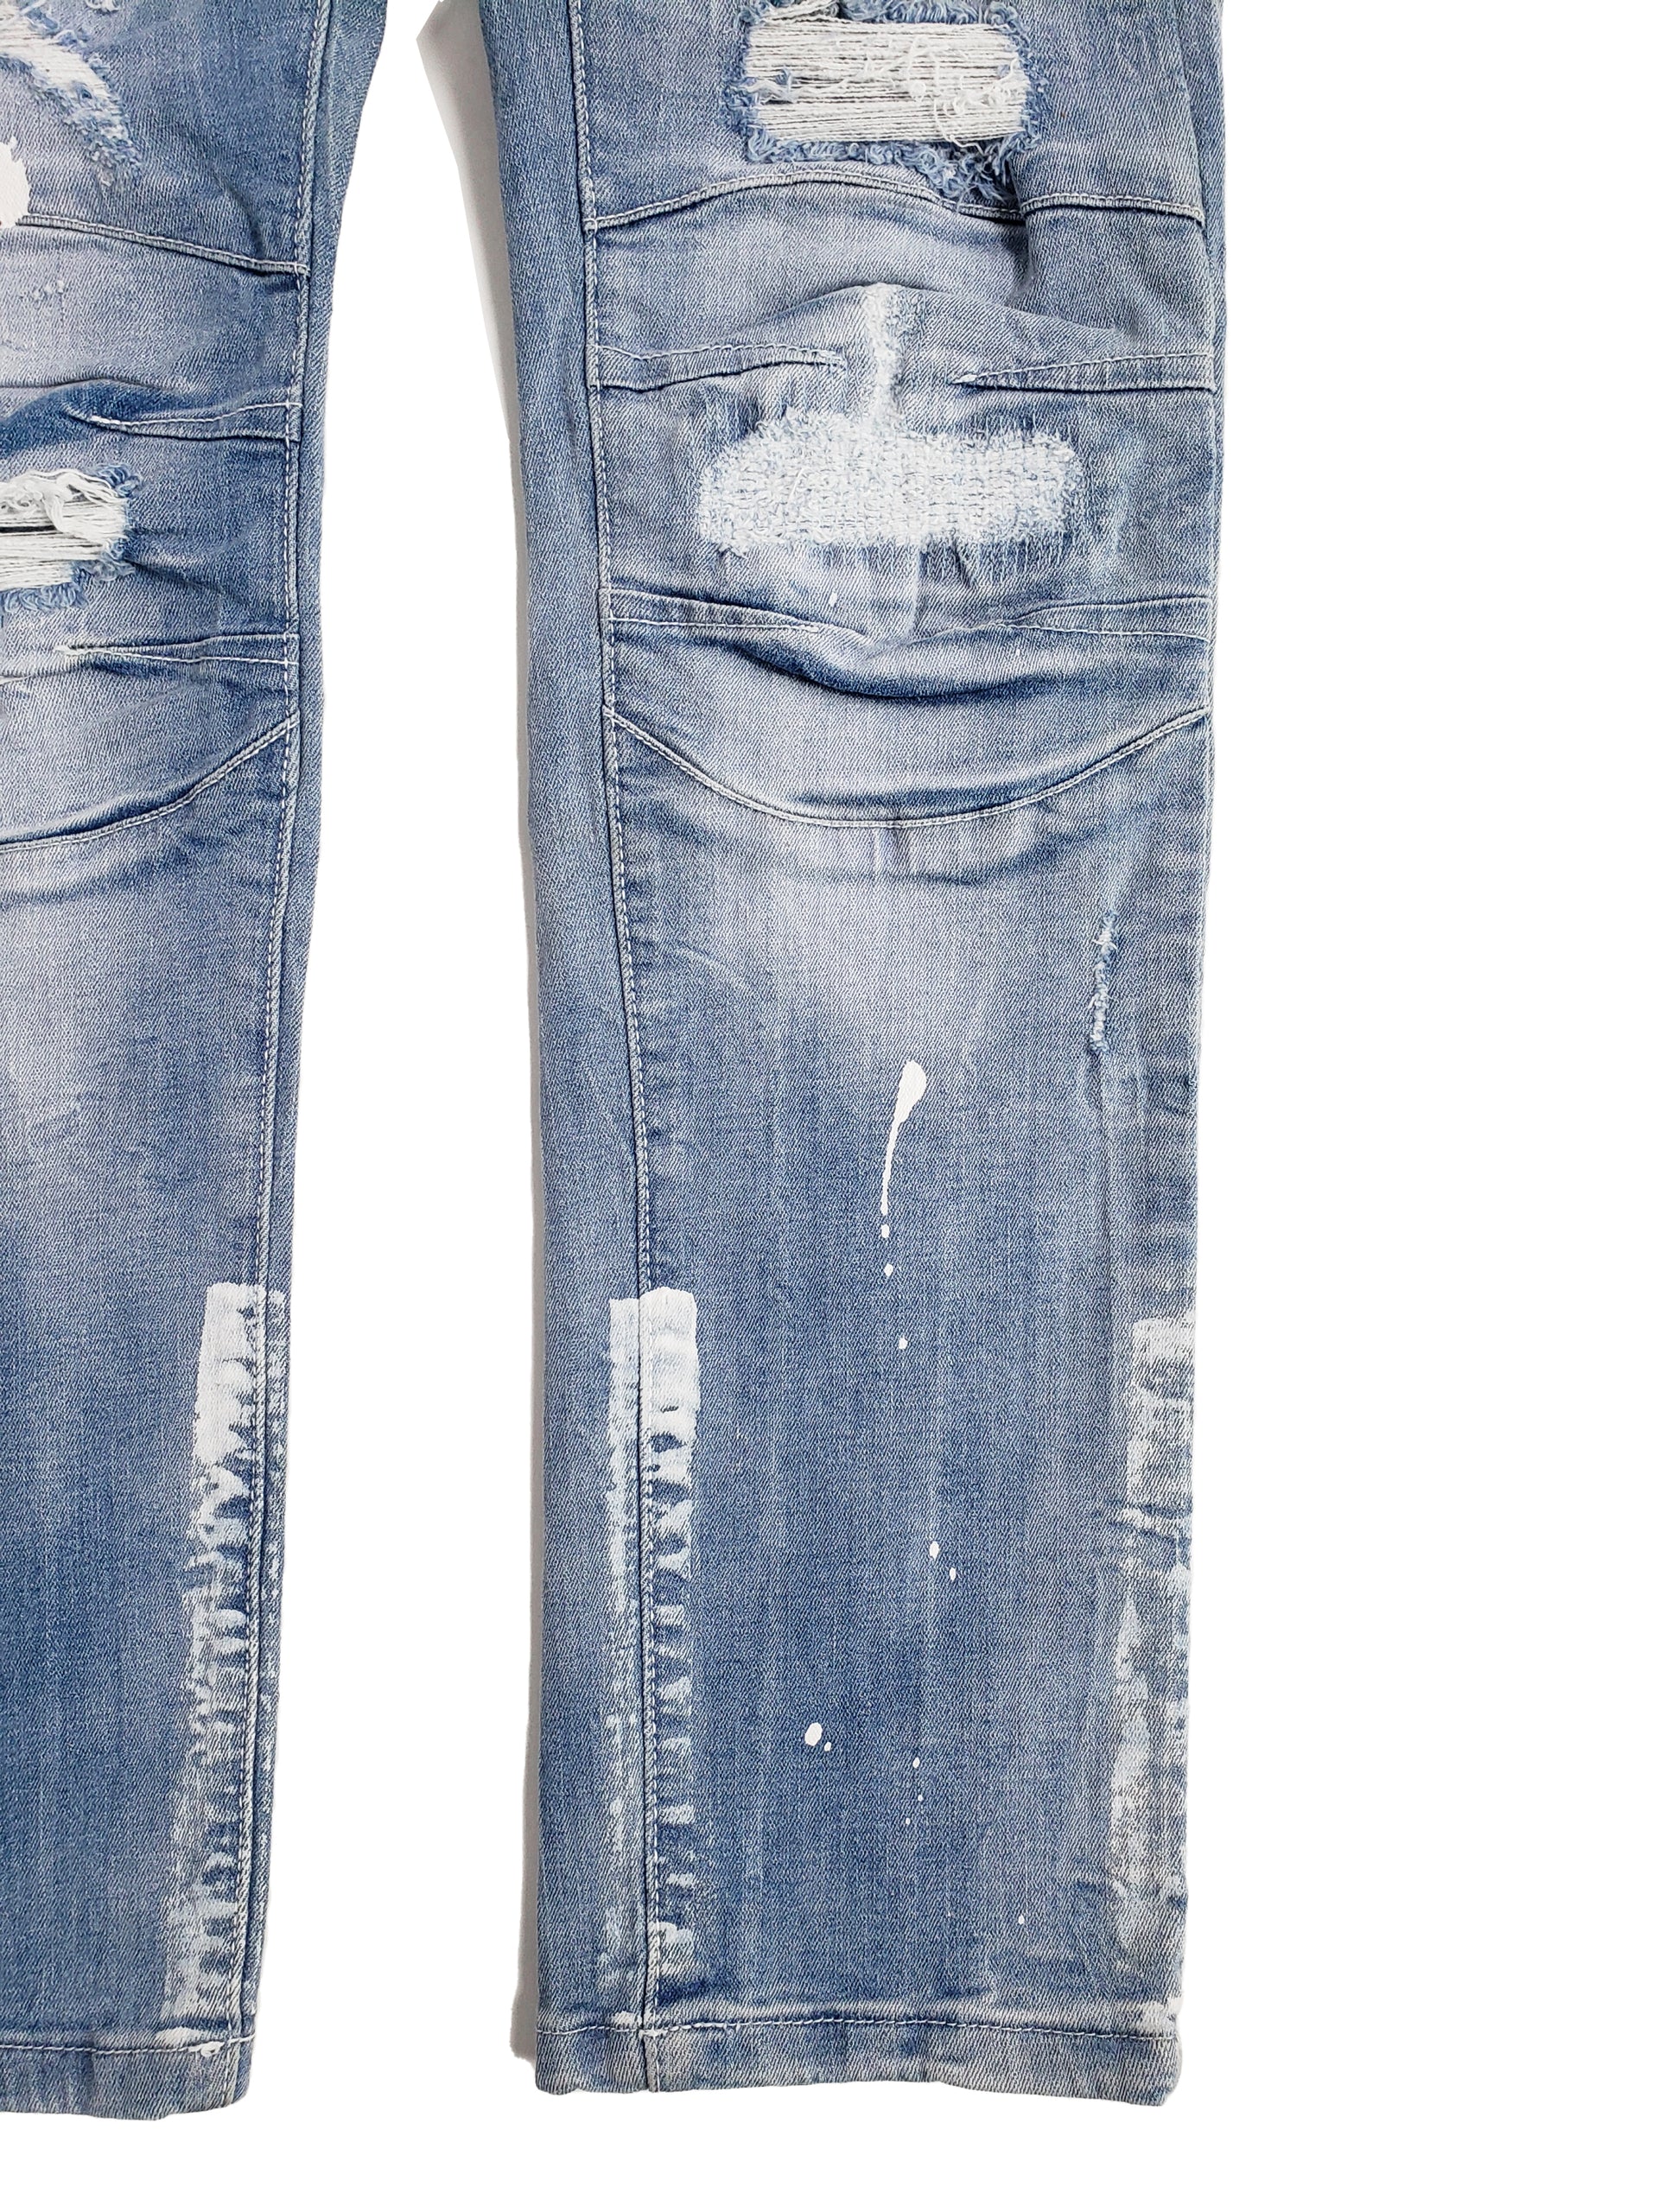 HALSTED | Men's Slim Fit Denim Pants Rip & Repair 3D Knee Detail with Splatter Paint in Light Wash